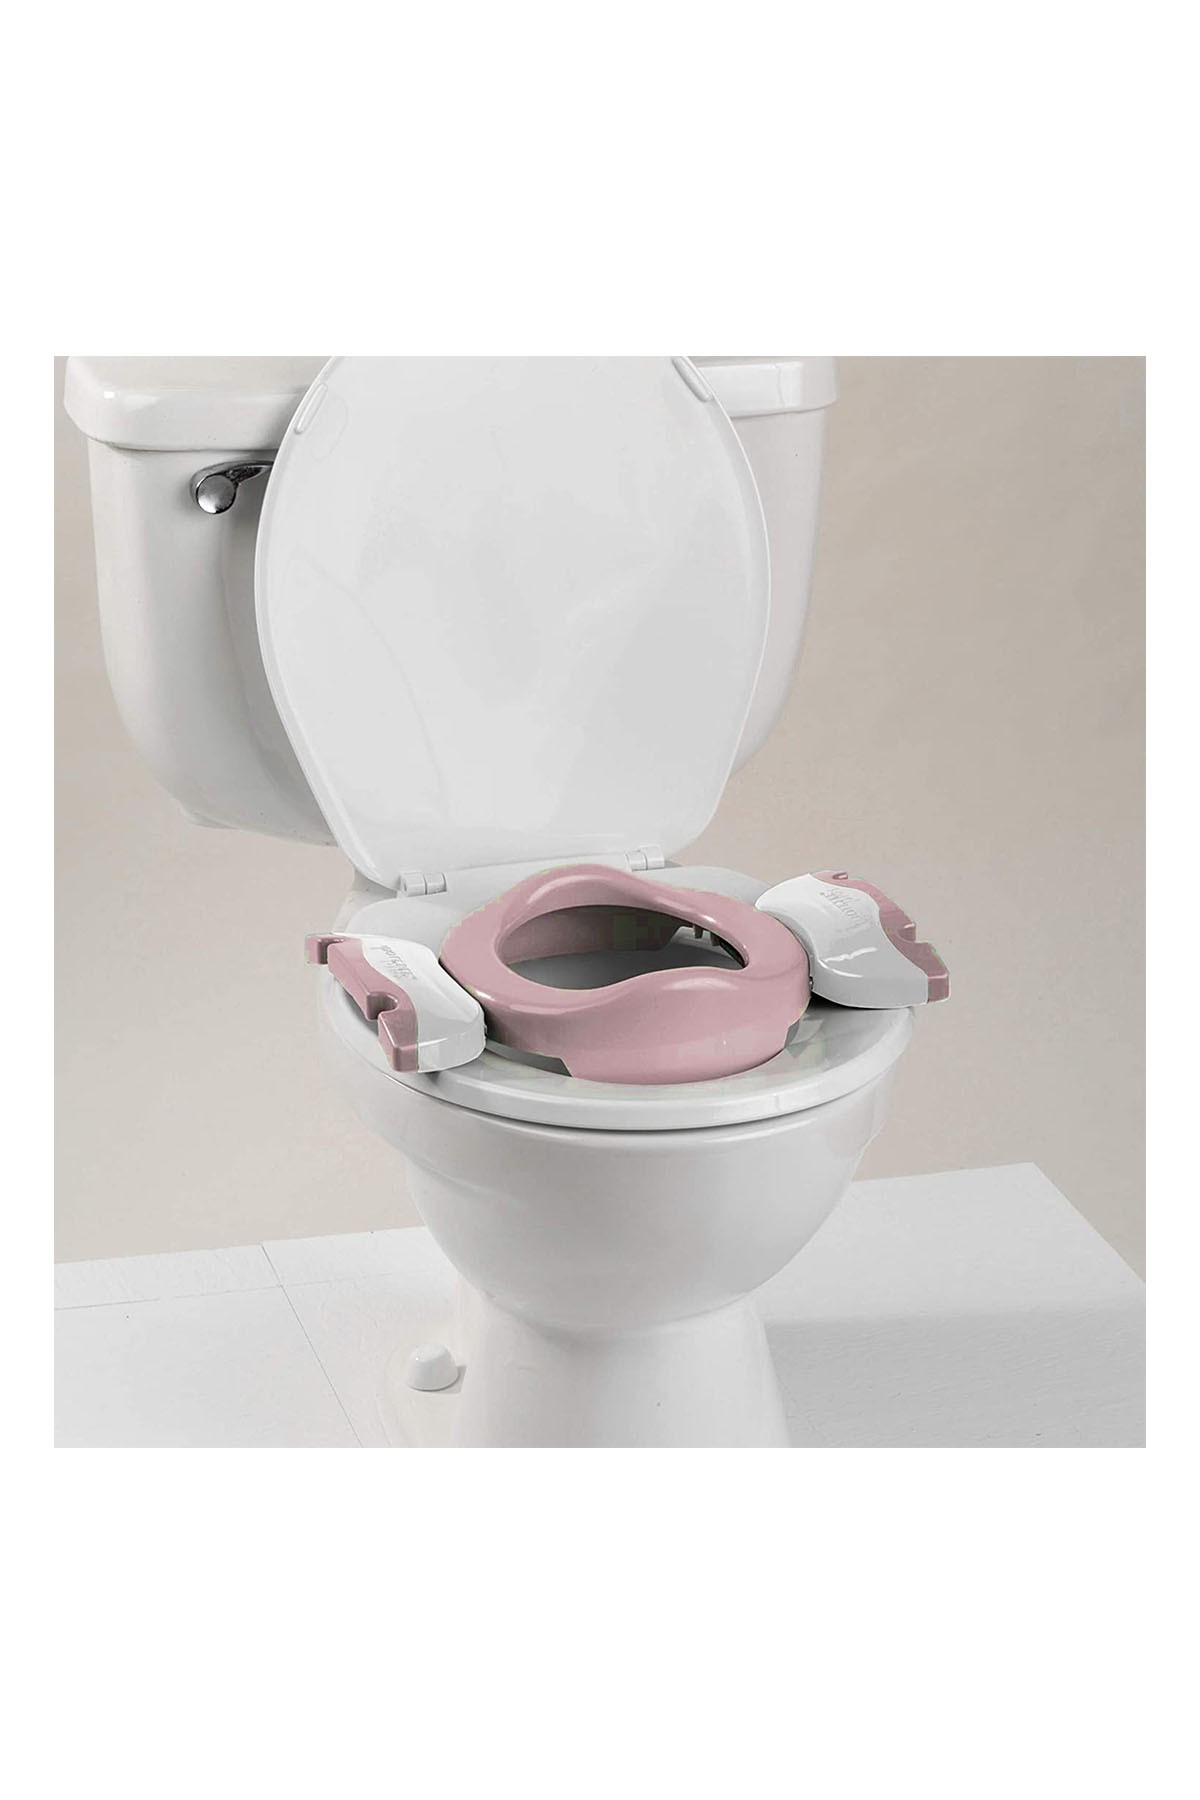 Potette Plus Portatif Lazımlık Eğitici Oturak Tuvalet Adaptörü Pembe